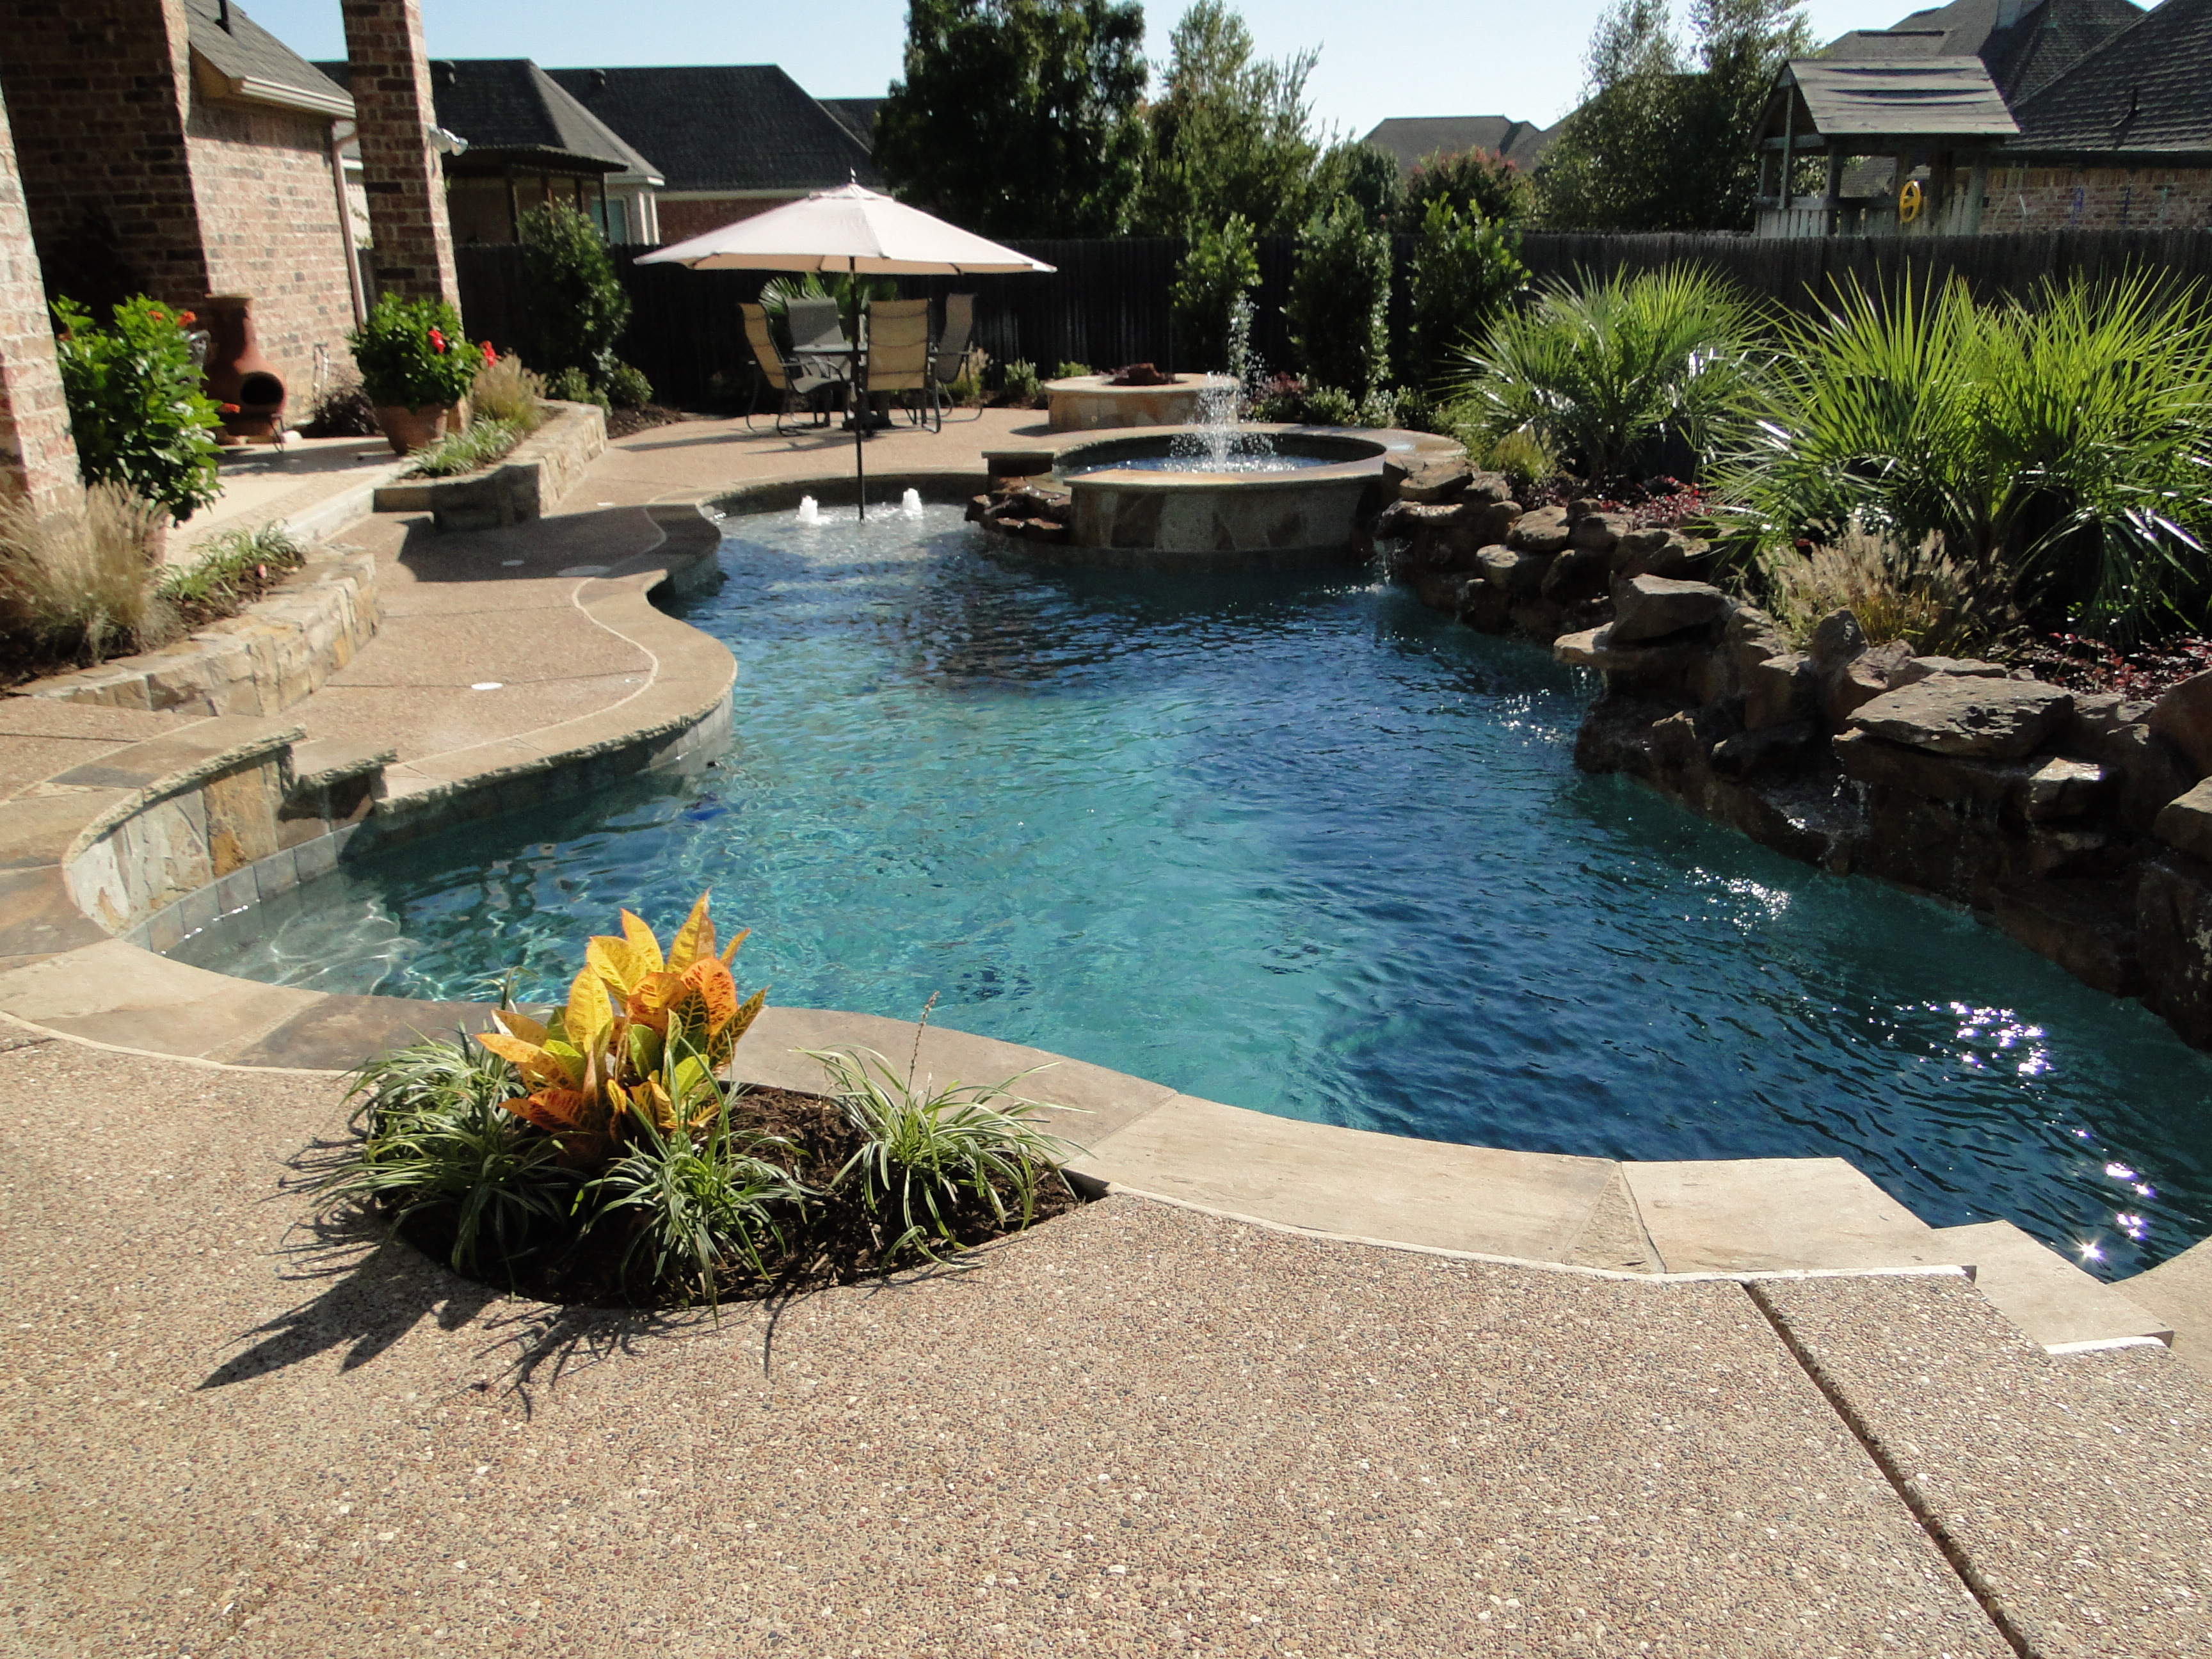  pool garden designs